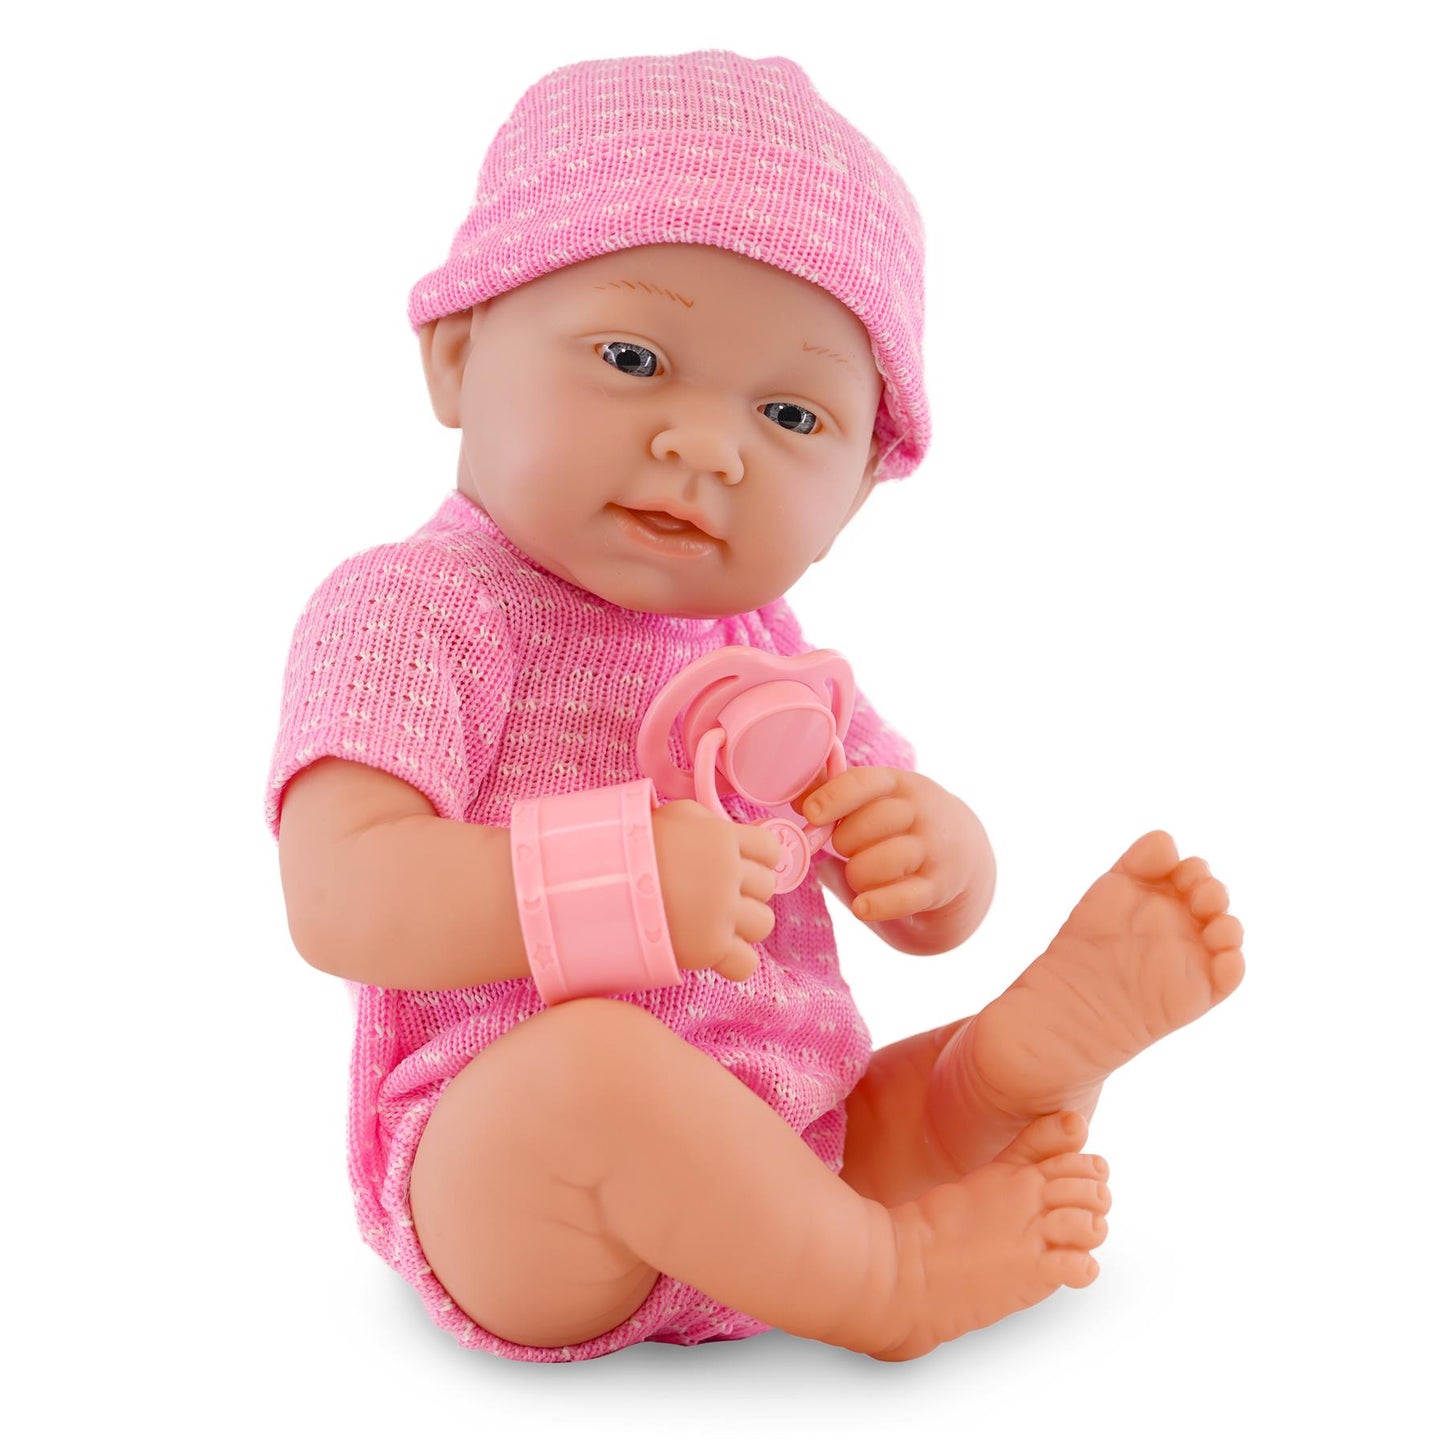 BiBi Newborn Girl Doll & Accessories (35 cm / 14") by The Magic Toy Shop - UKBuyZone